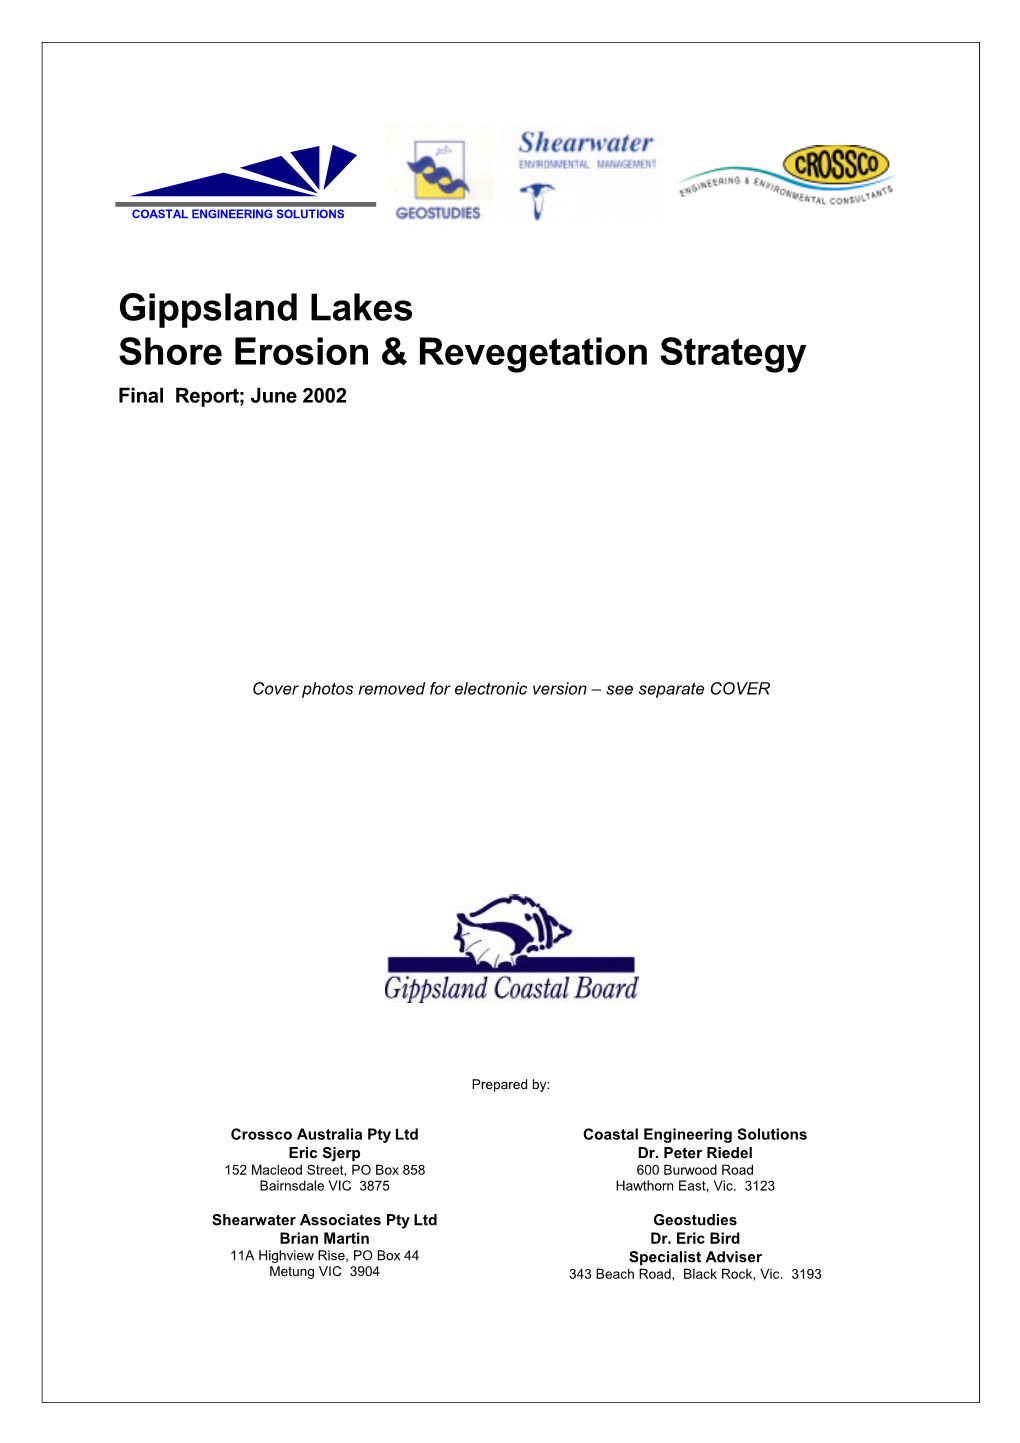 Gippsland Lakes Shore Erosion & Revegetation Strategy